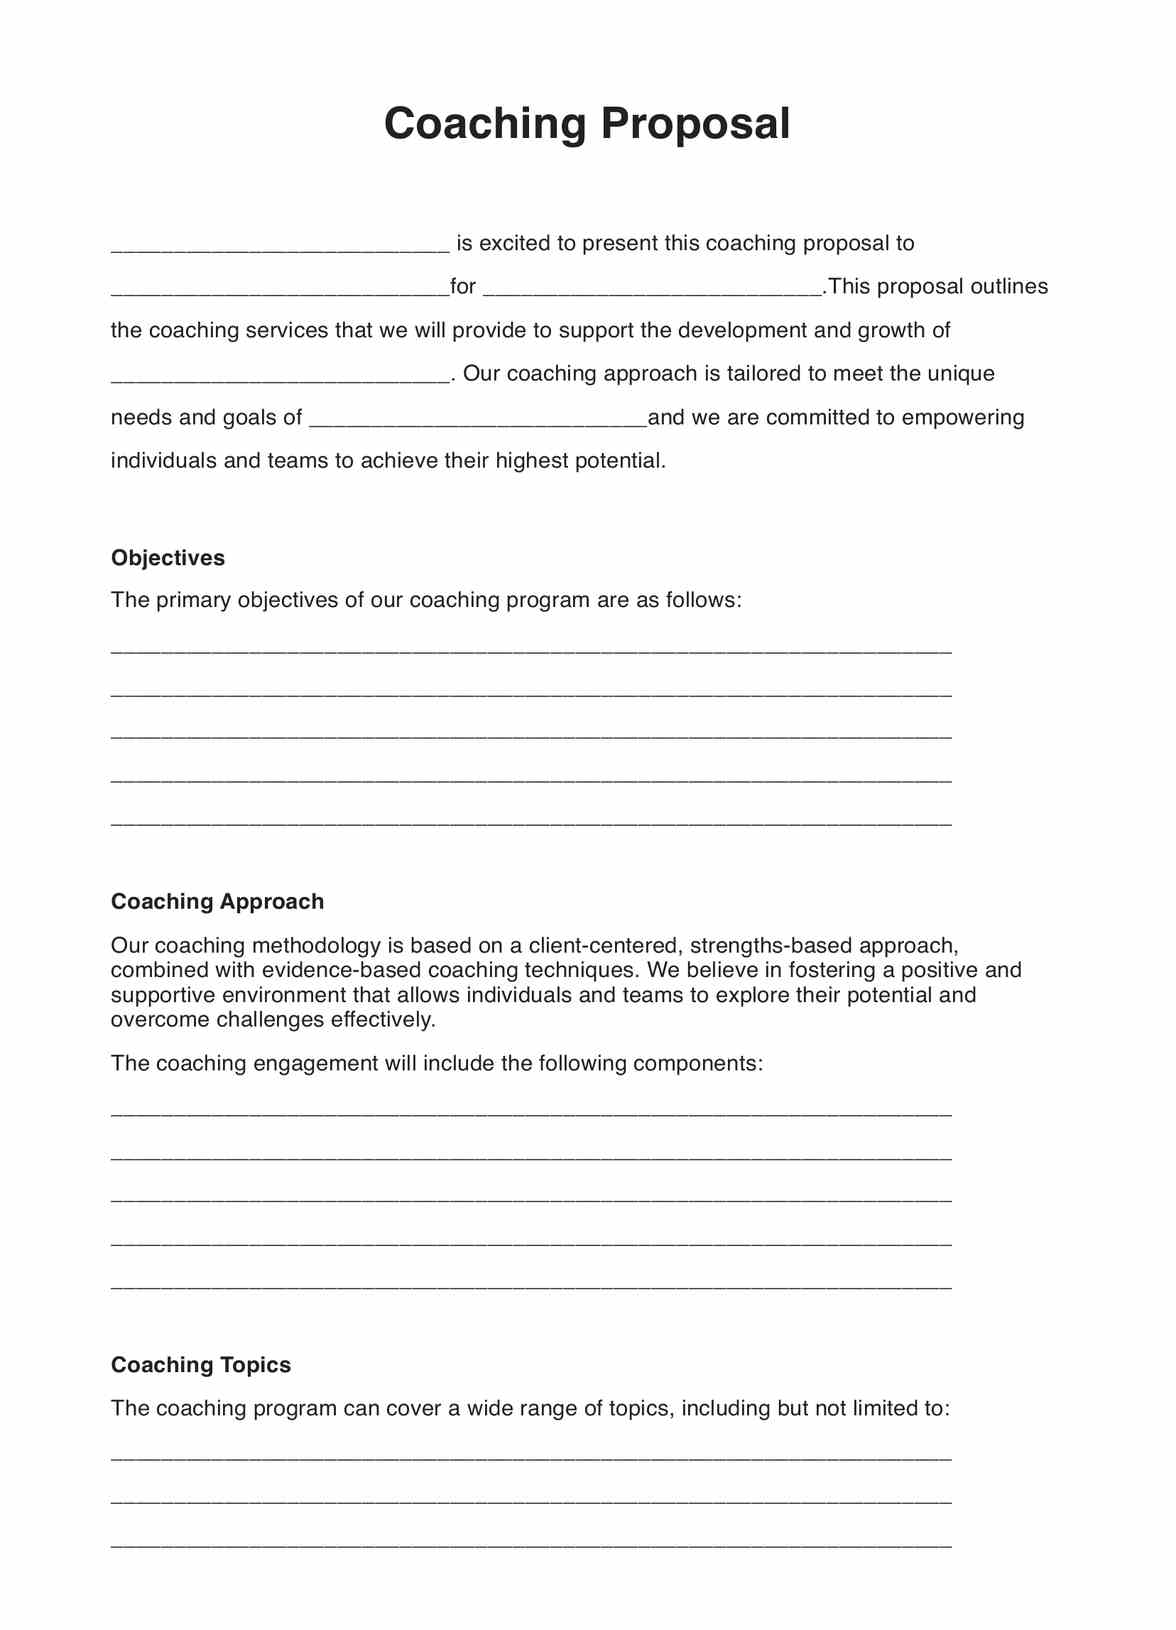 Coaching Proposals PDF Example